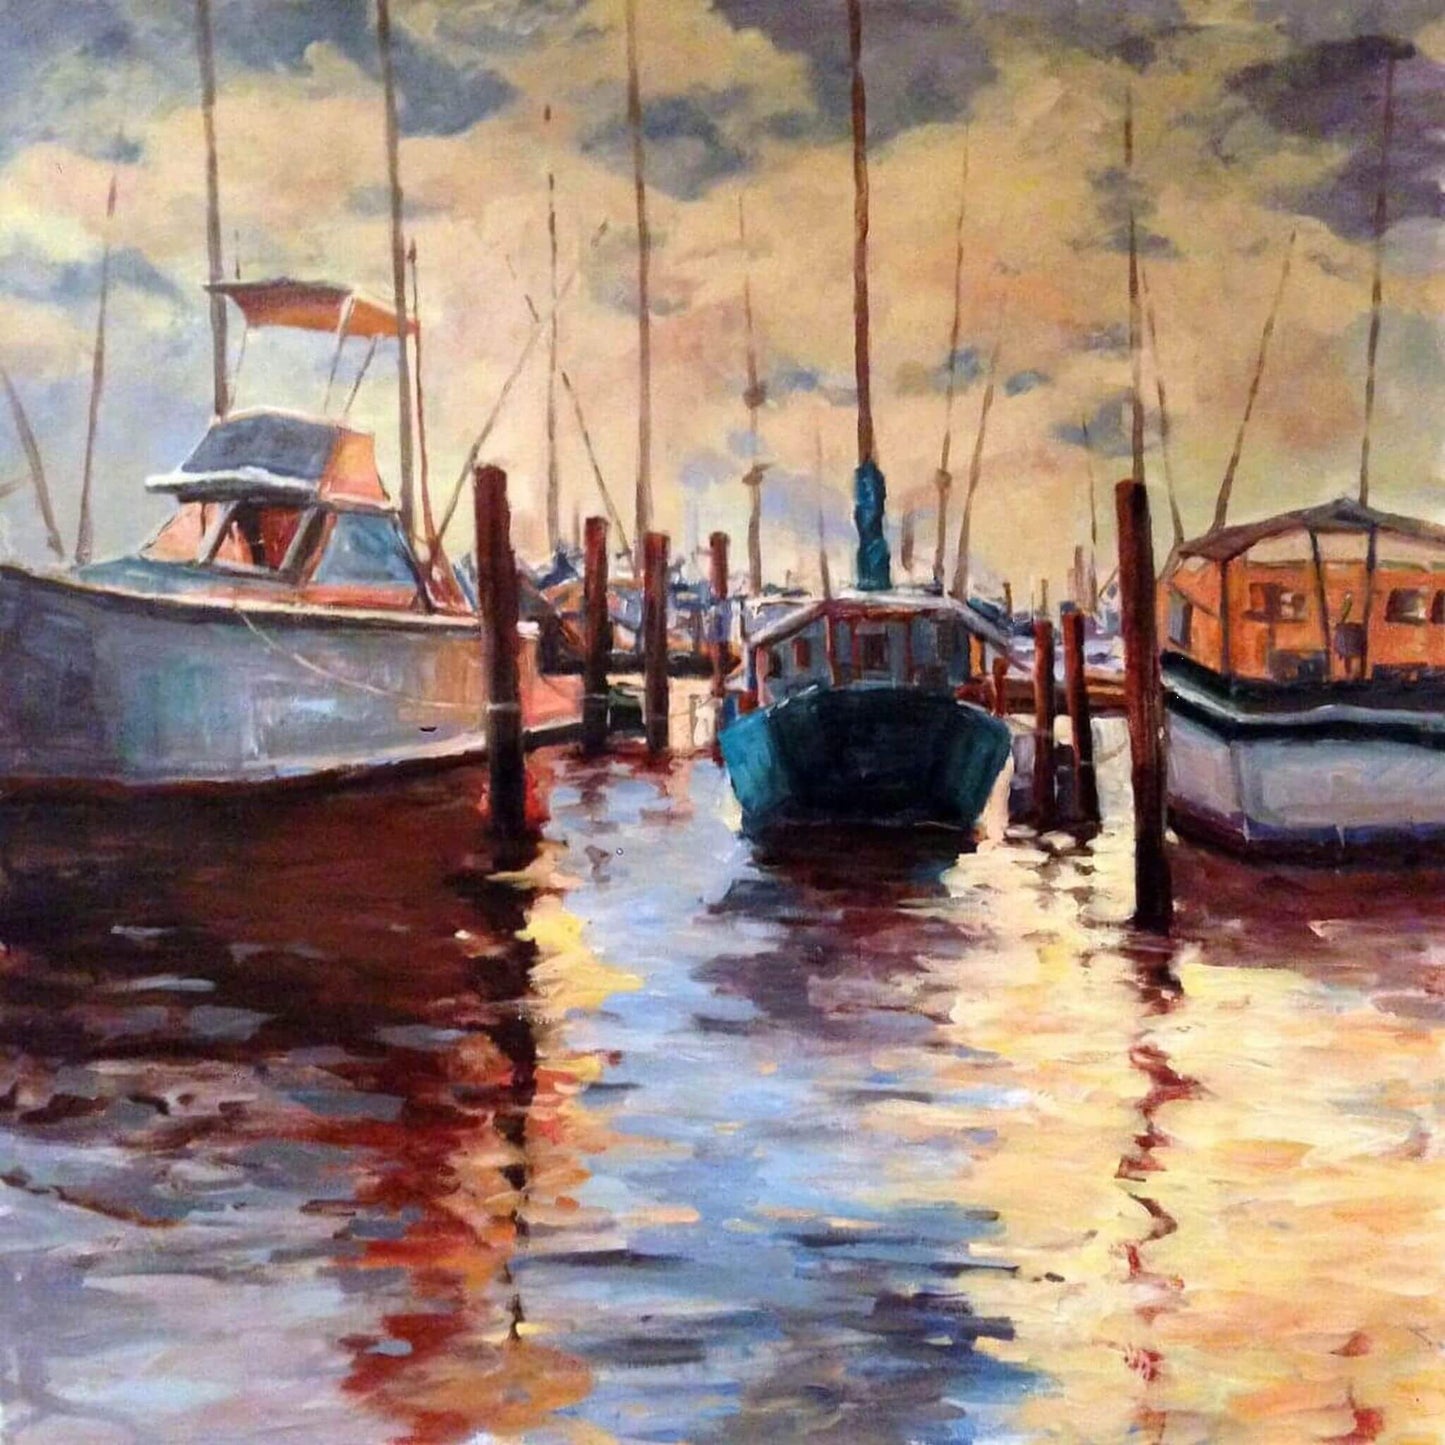 Docks at Sunset Glossy Poster Print